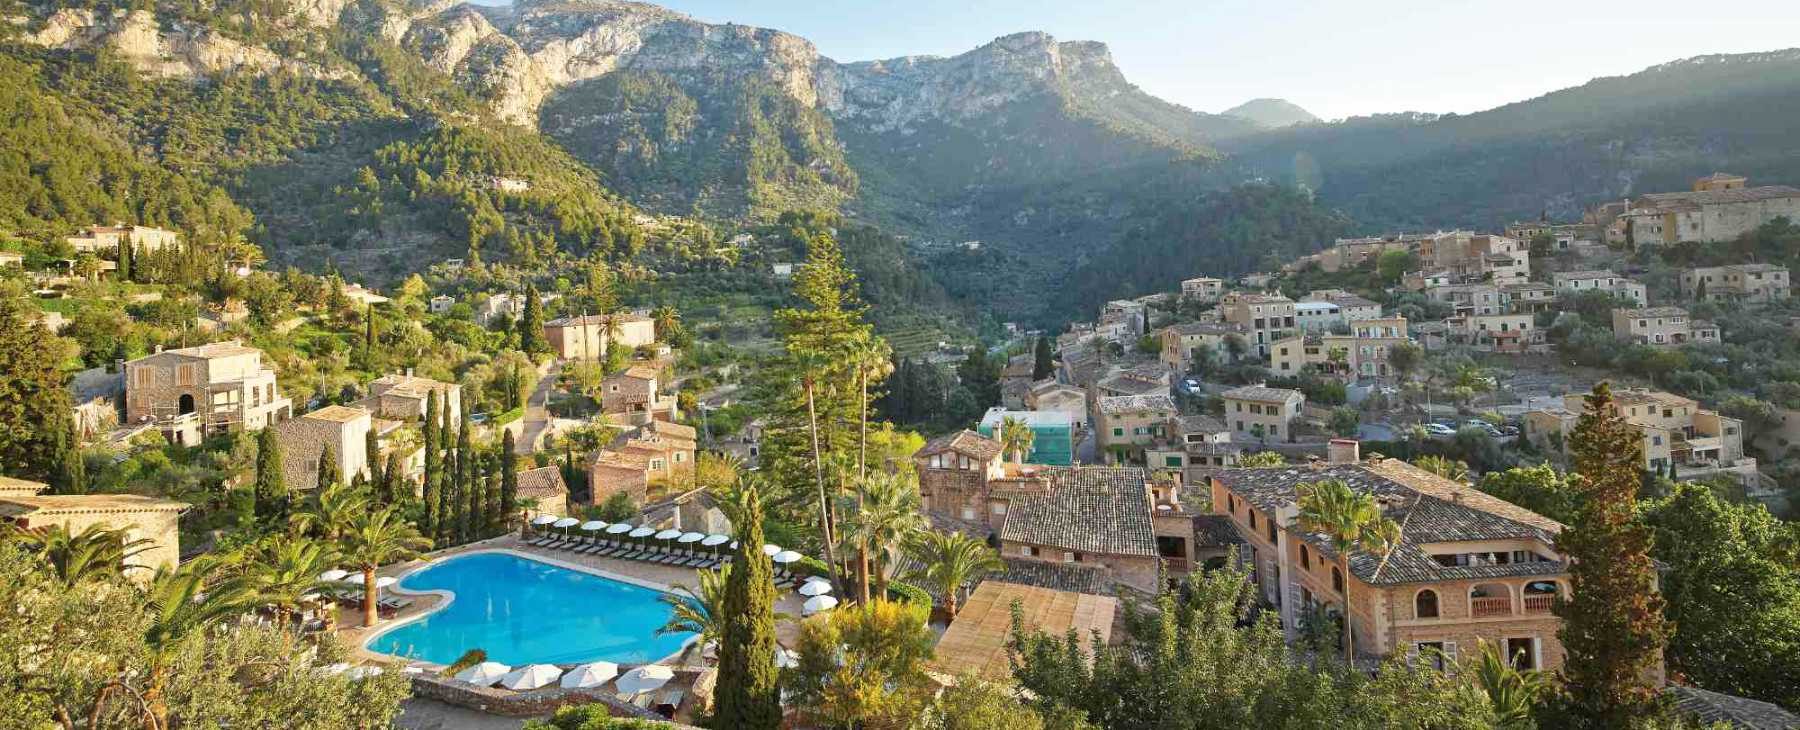 Luxushotel Belmond La Residencia Mallorca Spanien